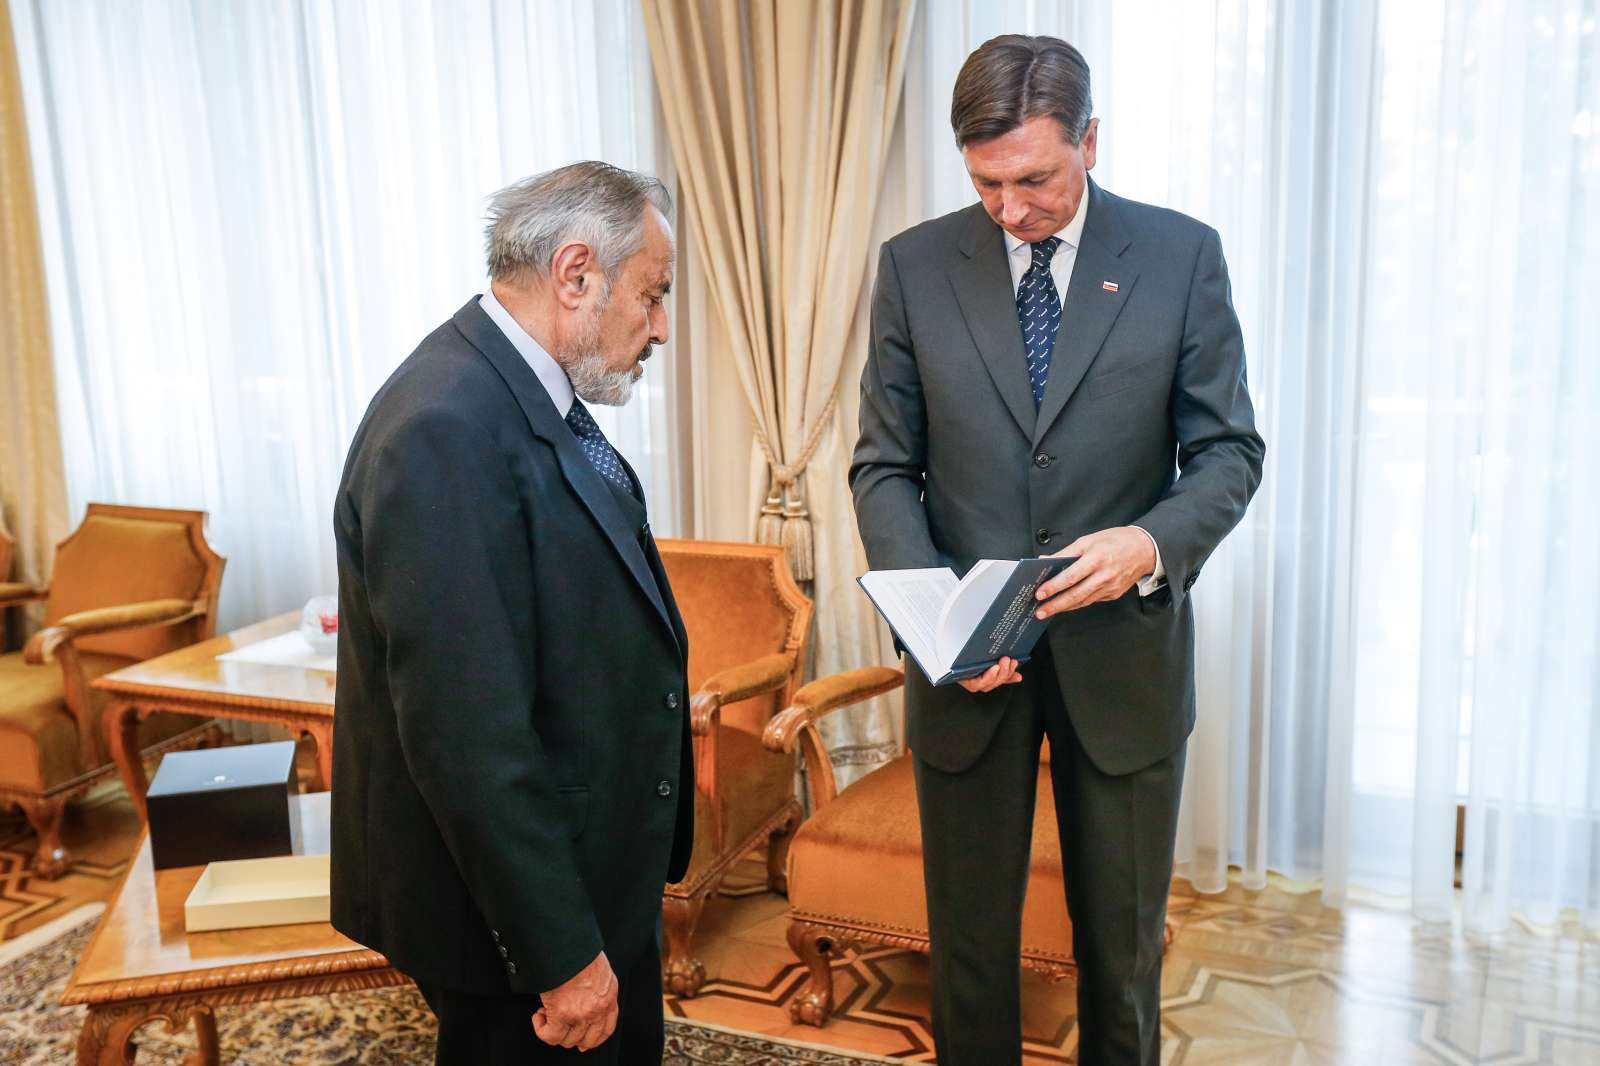 Predsednik republike Borut Pahor in dr. Ernest Petrič